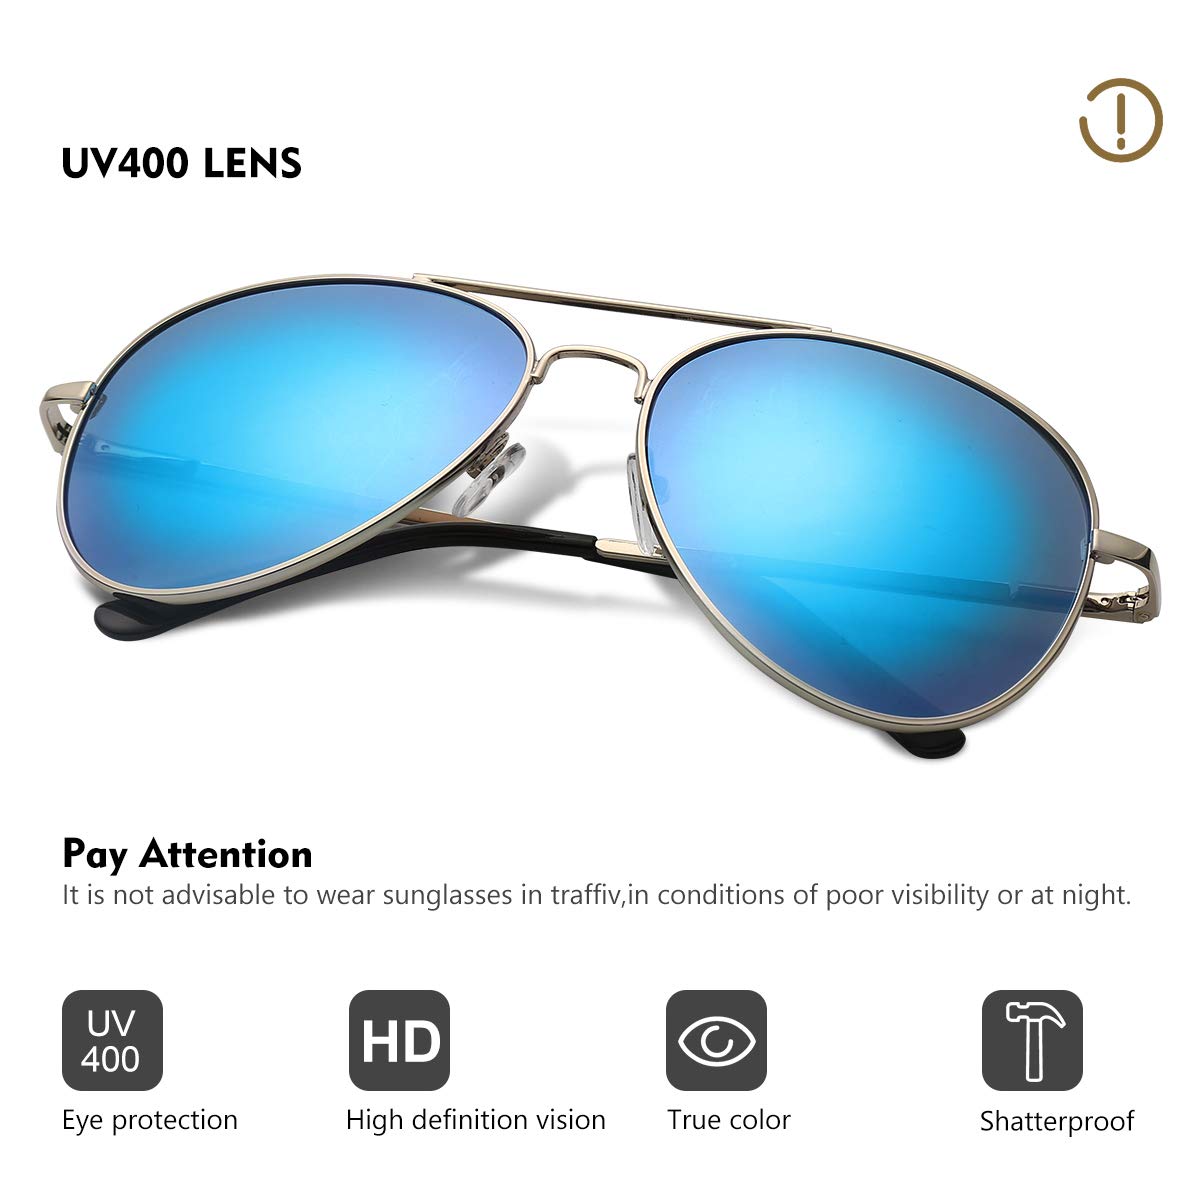 Duduma Premium Classic Sunglasses Mirrored Lens Sunglasses for Men Women Sun glass shades UV400 Protection